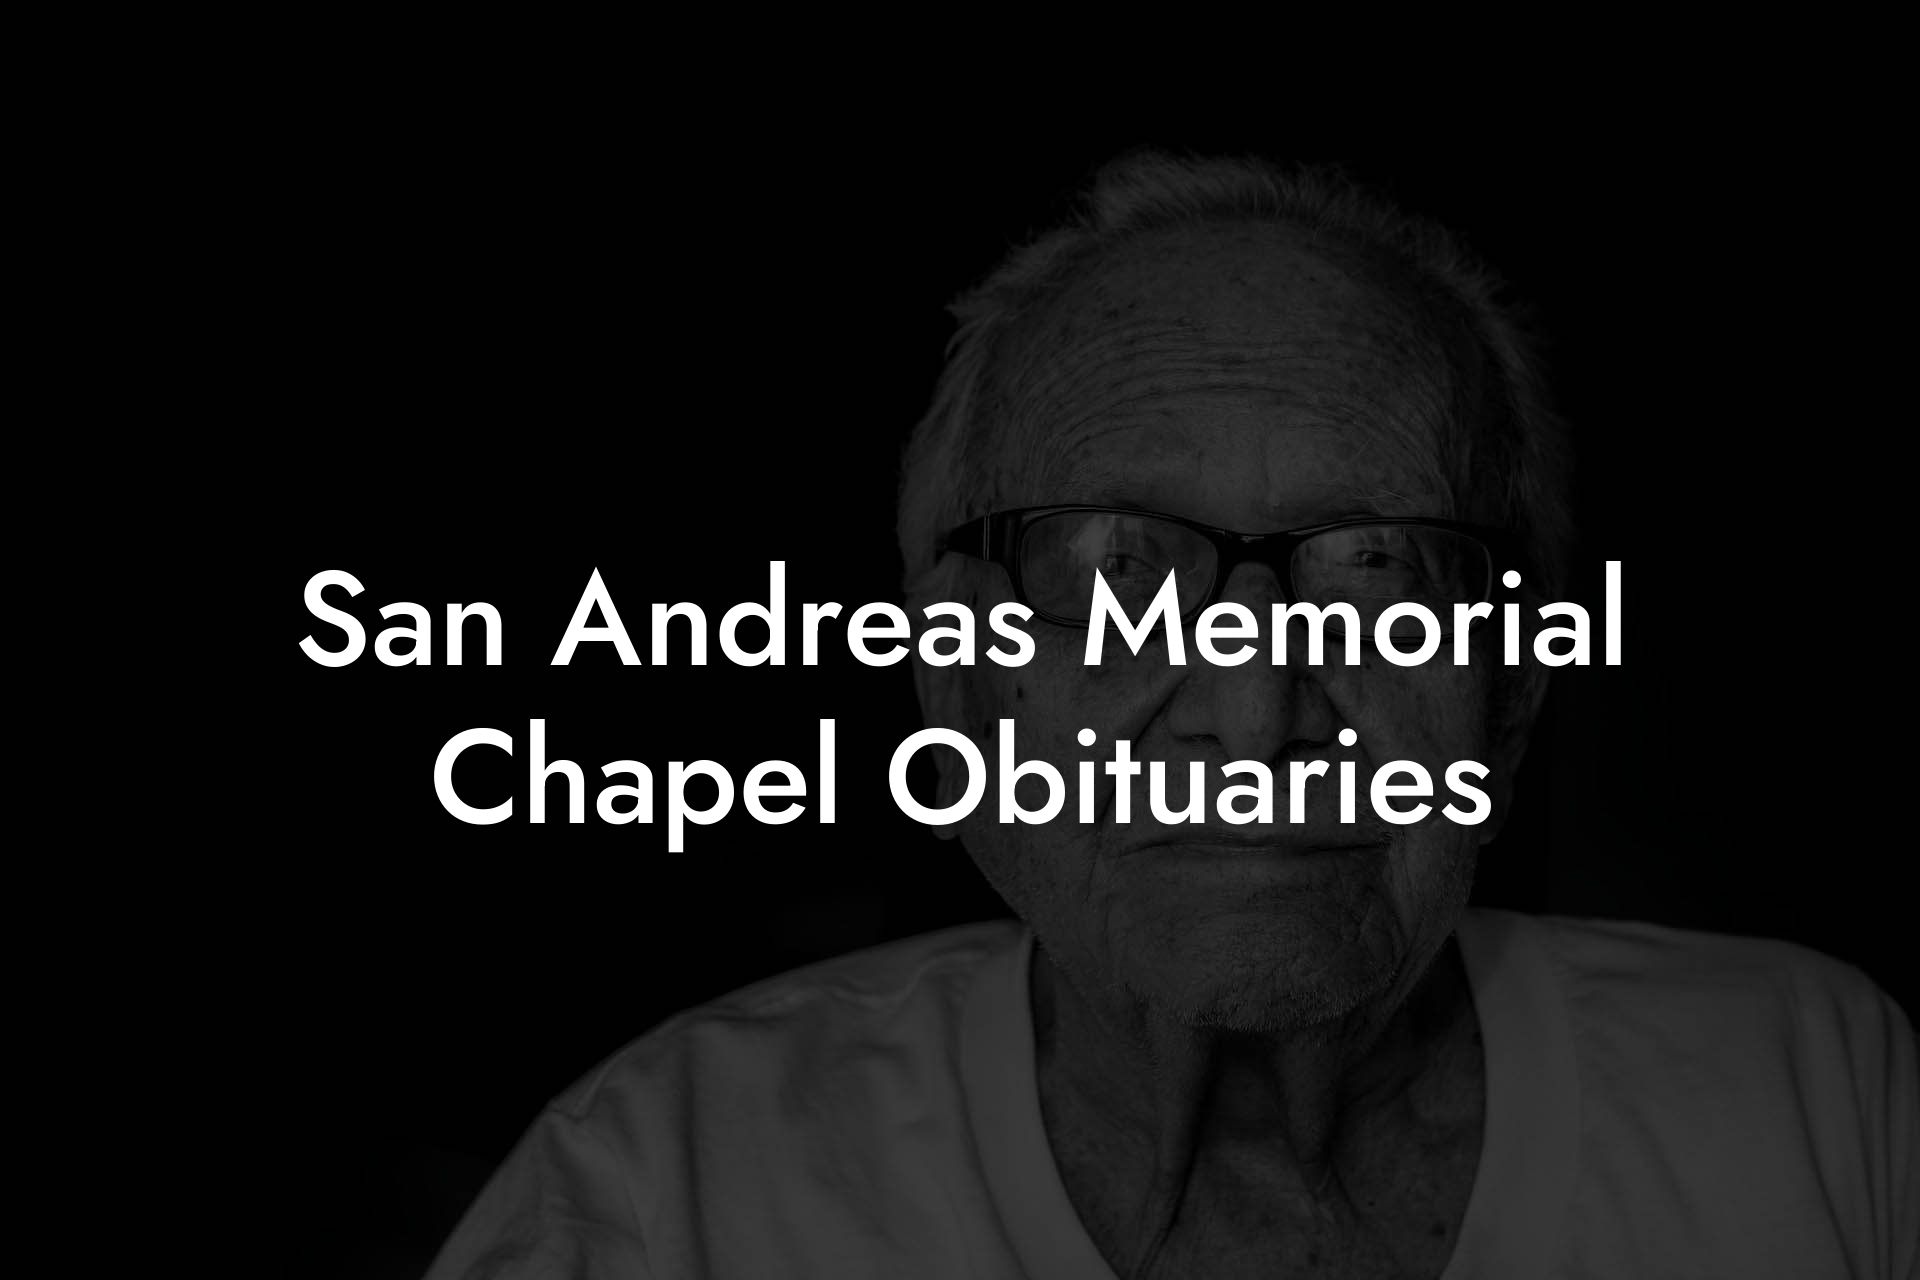 San Andreas Memorial Chapel Obituaries